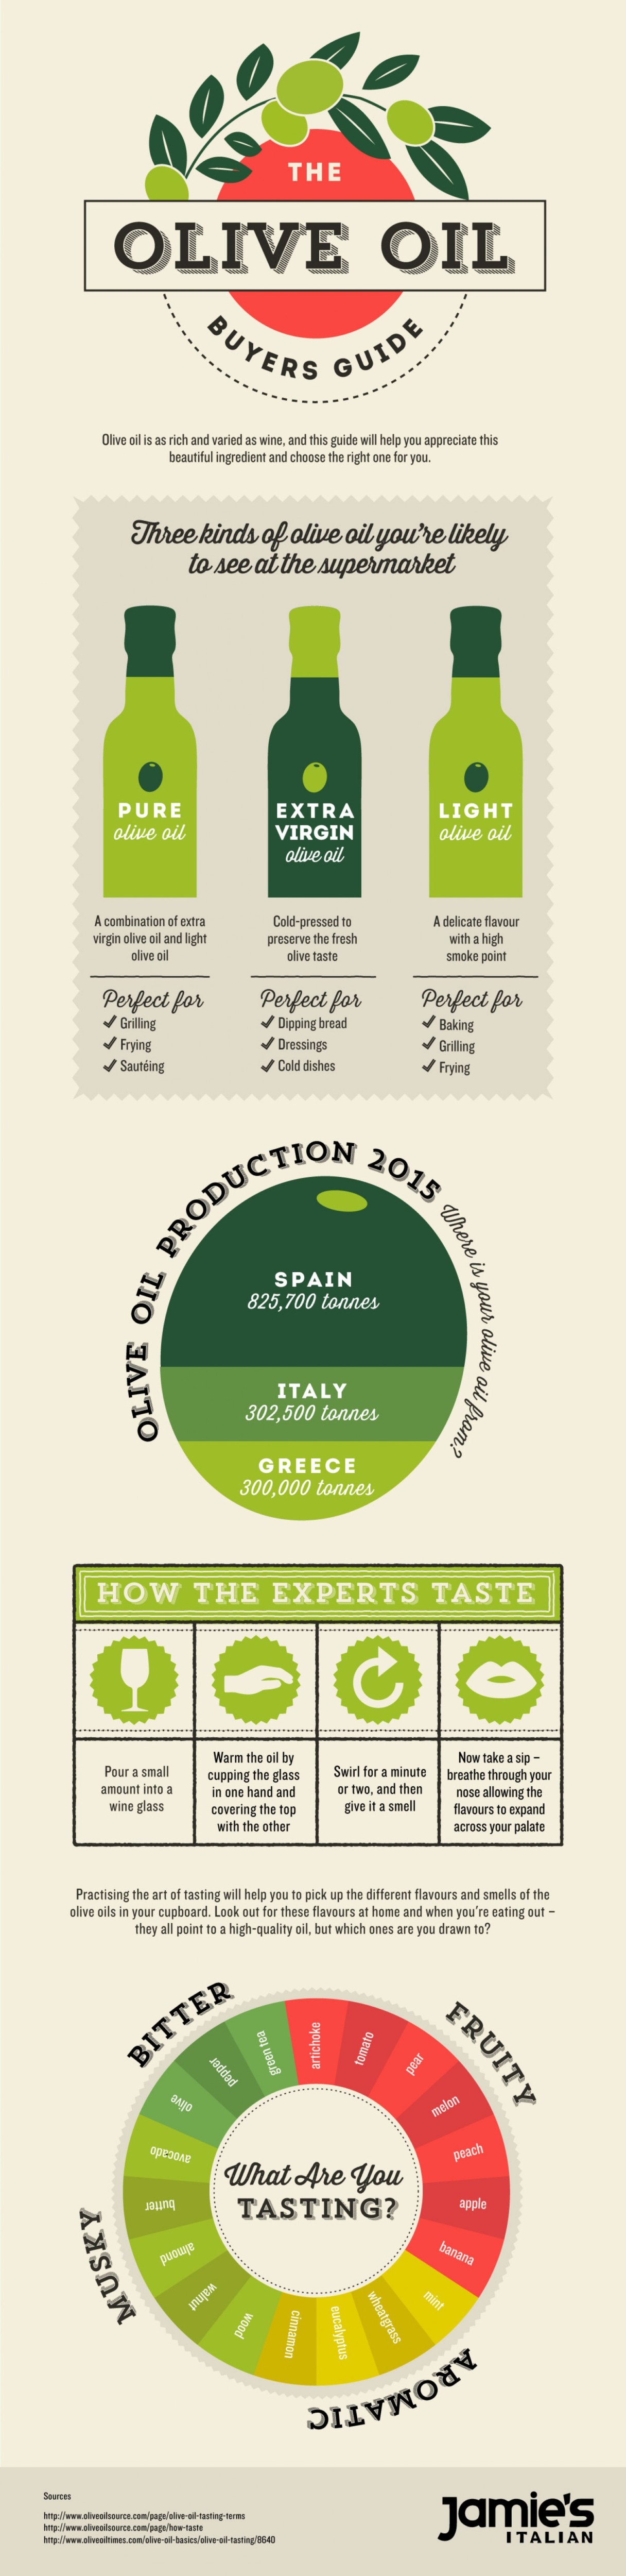 jamies-italian-olive-oil-buyers-guide_57320f2dda035_w1500